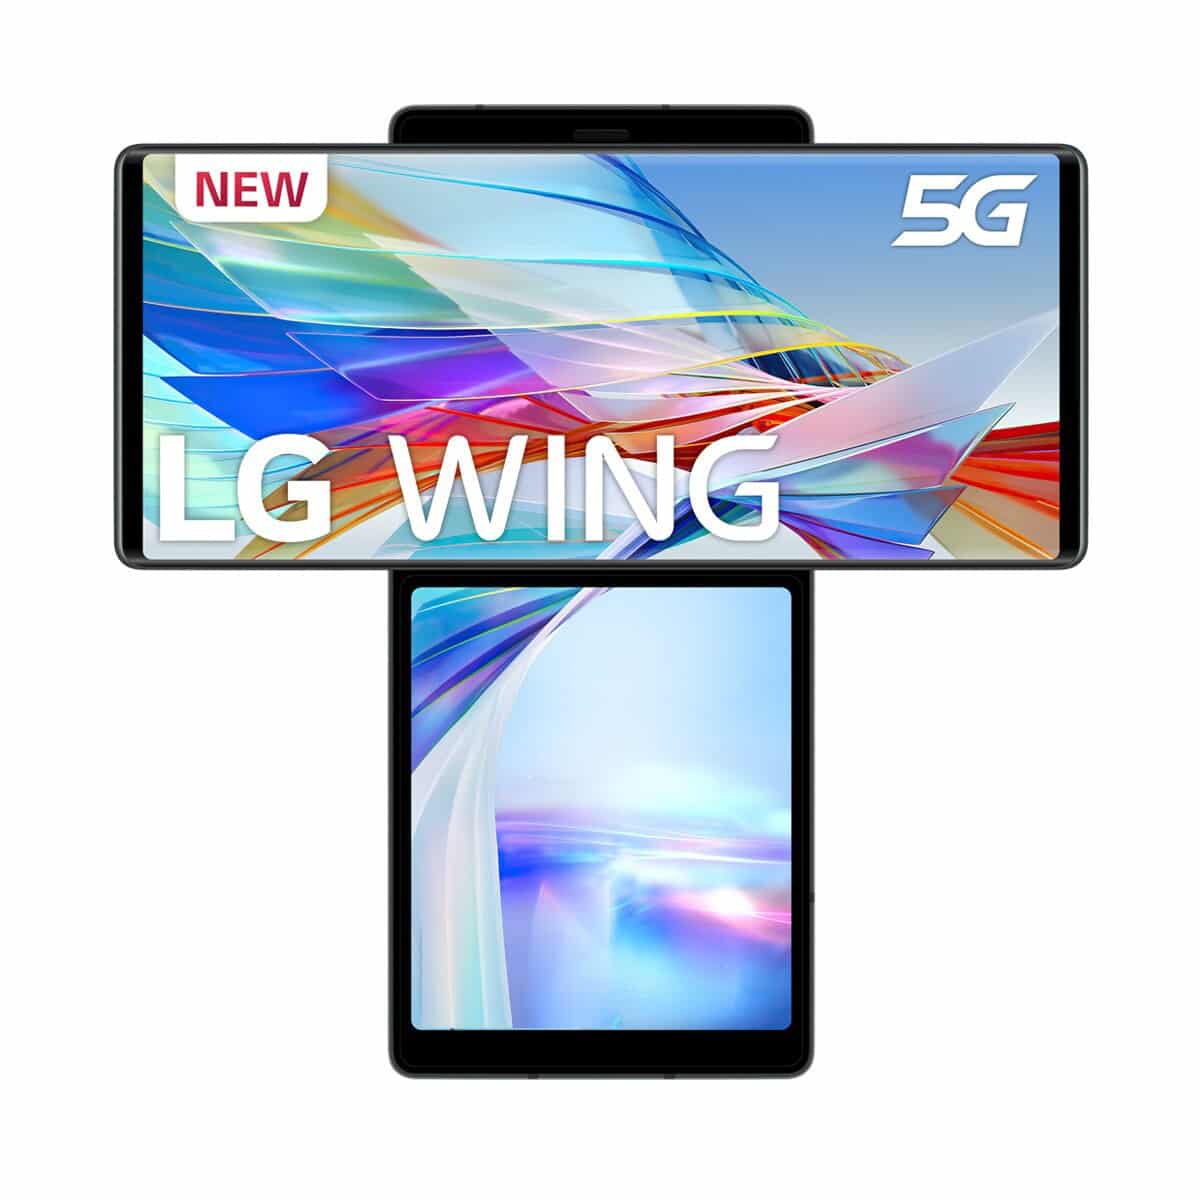 LG Wing 5G 8 GB + 128 GB Aurora Gray móvil libre